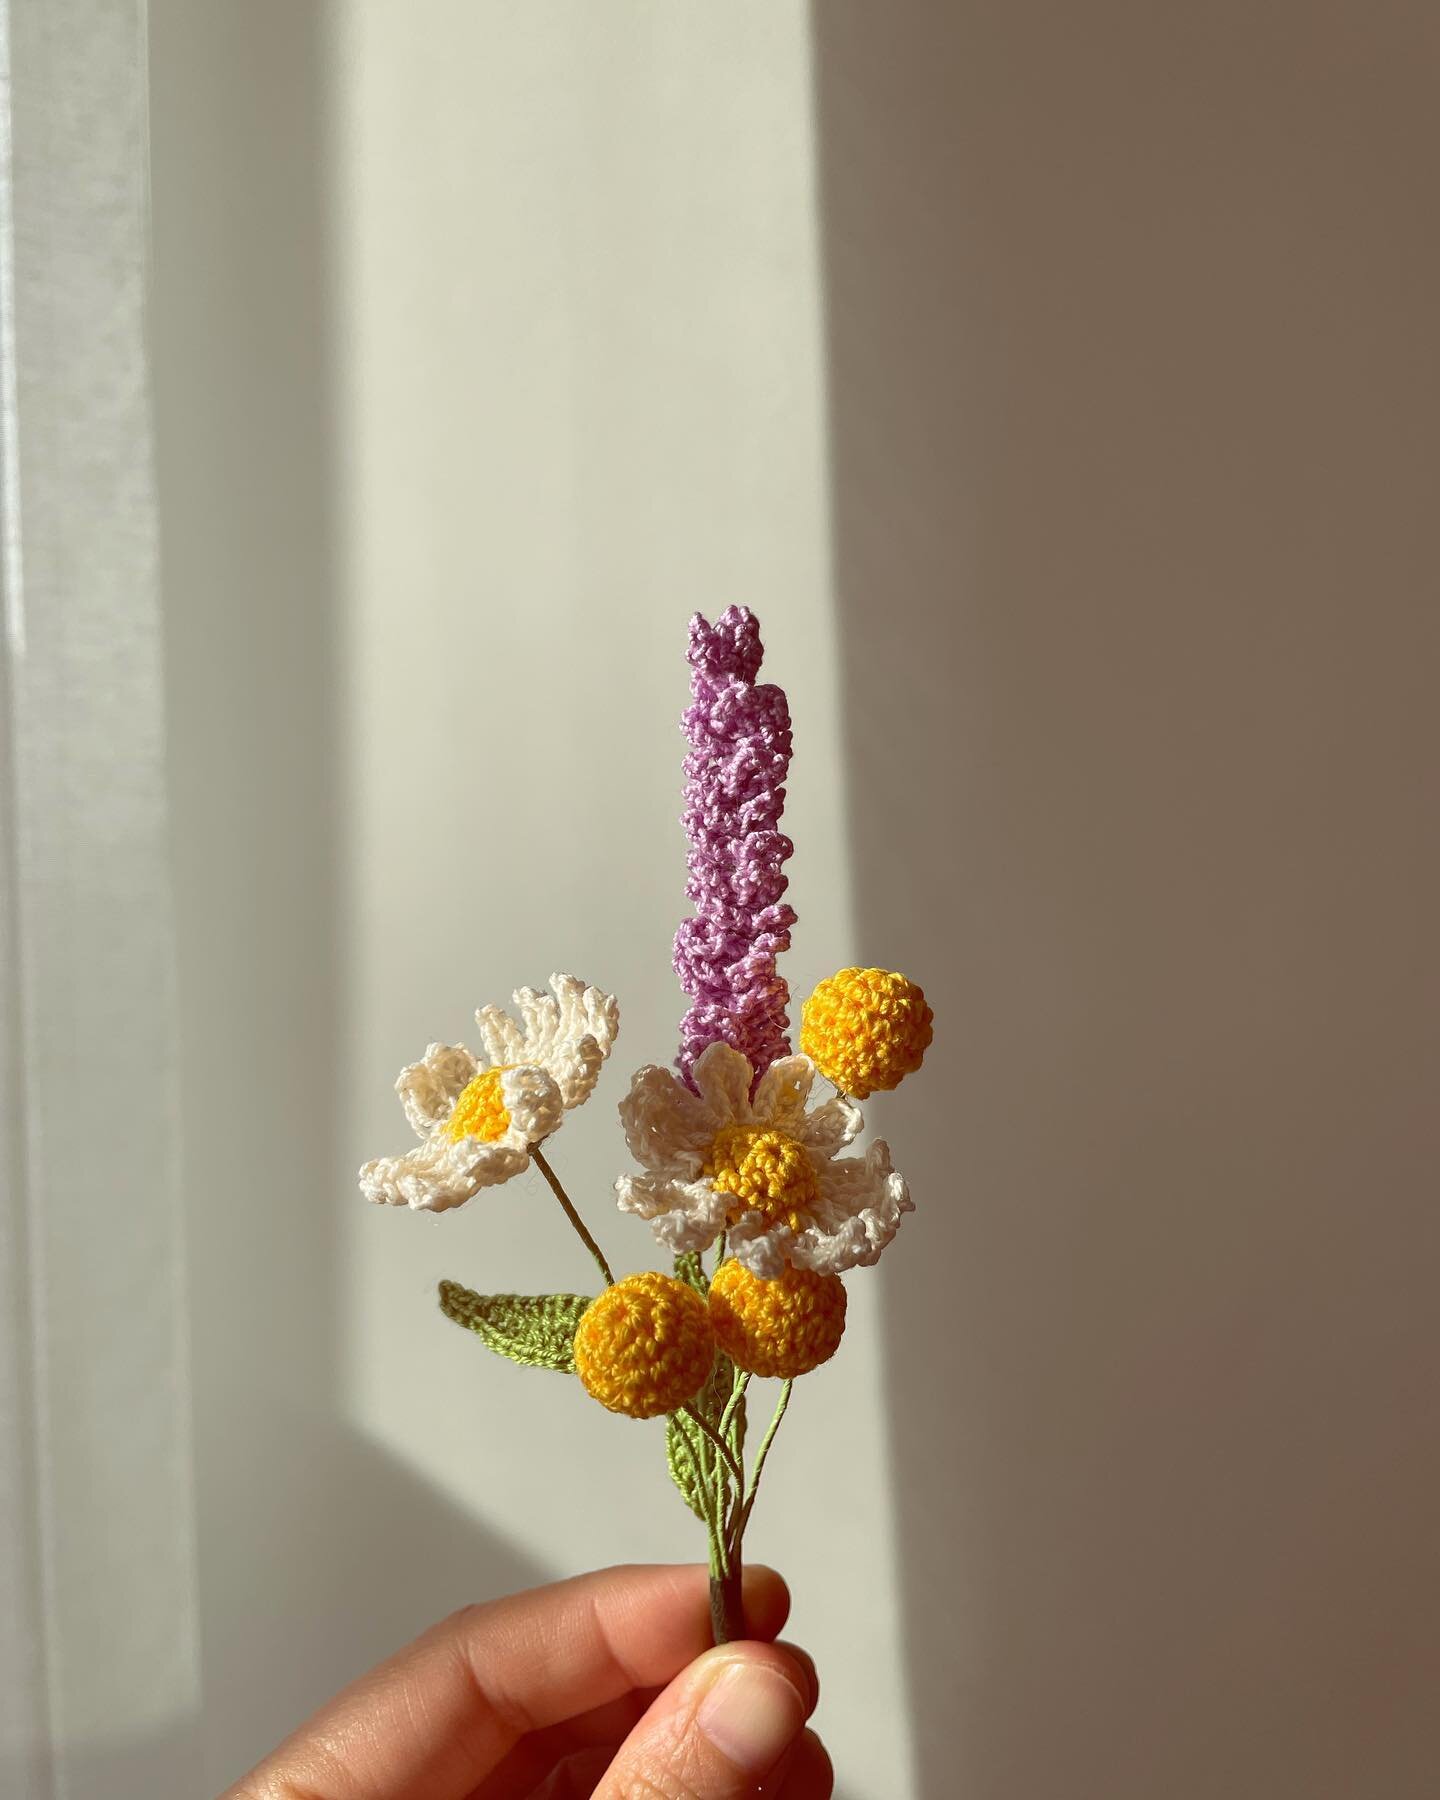 Lavender, little daisy, and craspedia (the yellow flowers)
.
.
.
.
.
#crochet#crochetflowers#flowers#bouquet#crochetbouquet